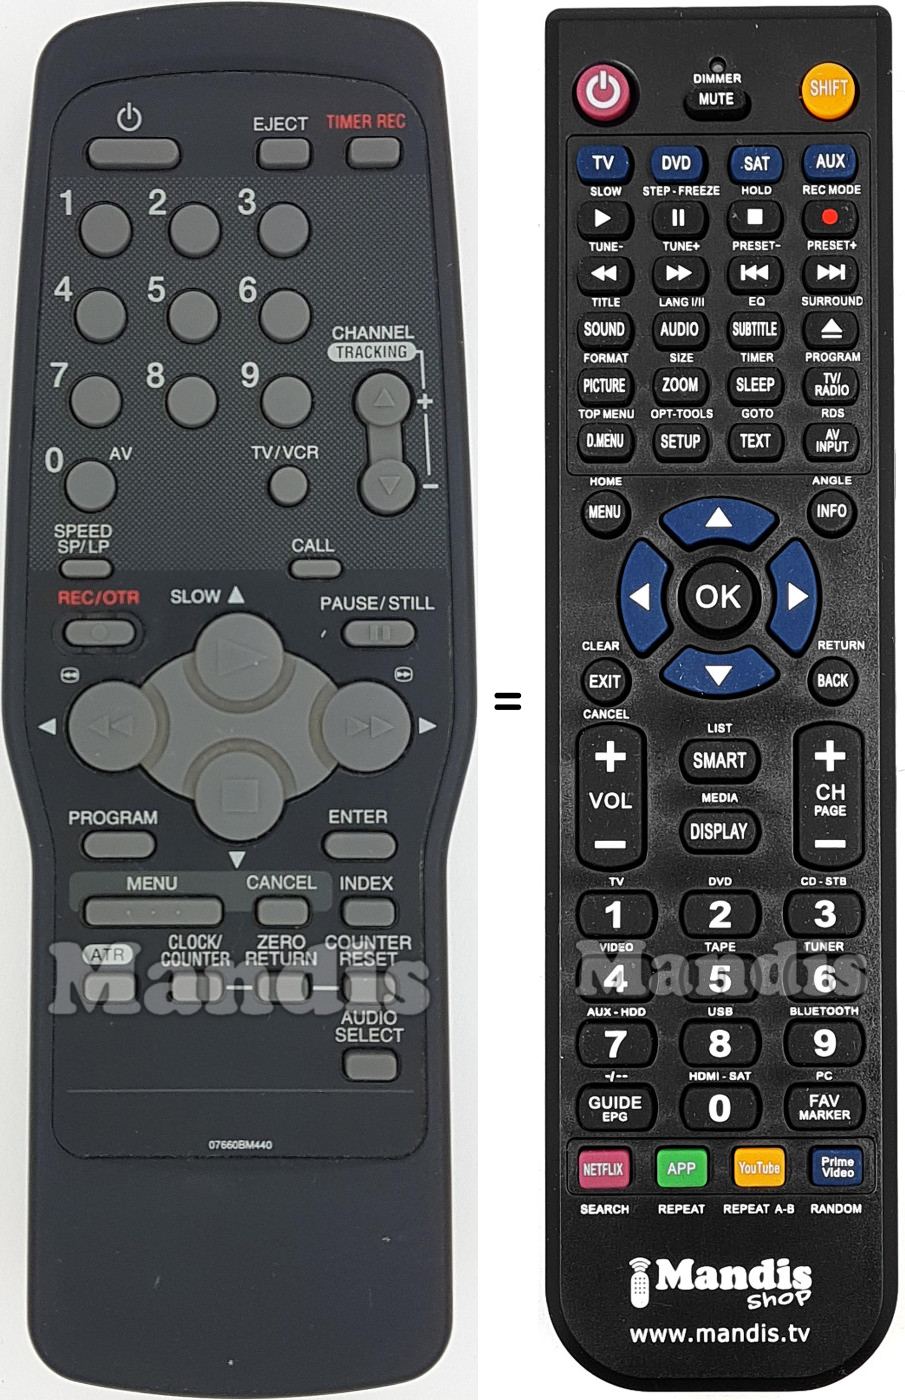 Replacement remote control Sinudyne 07660BM440